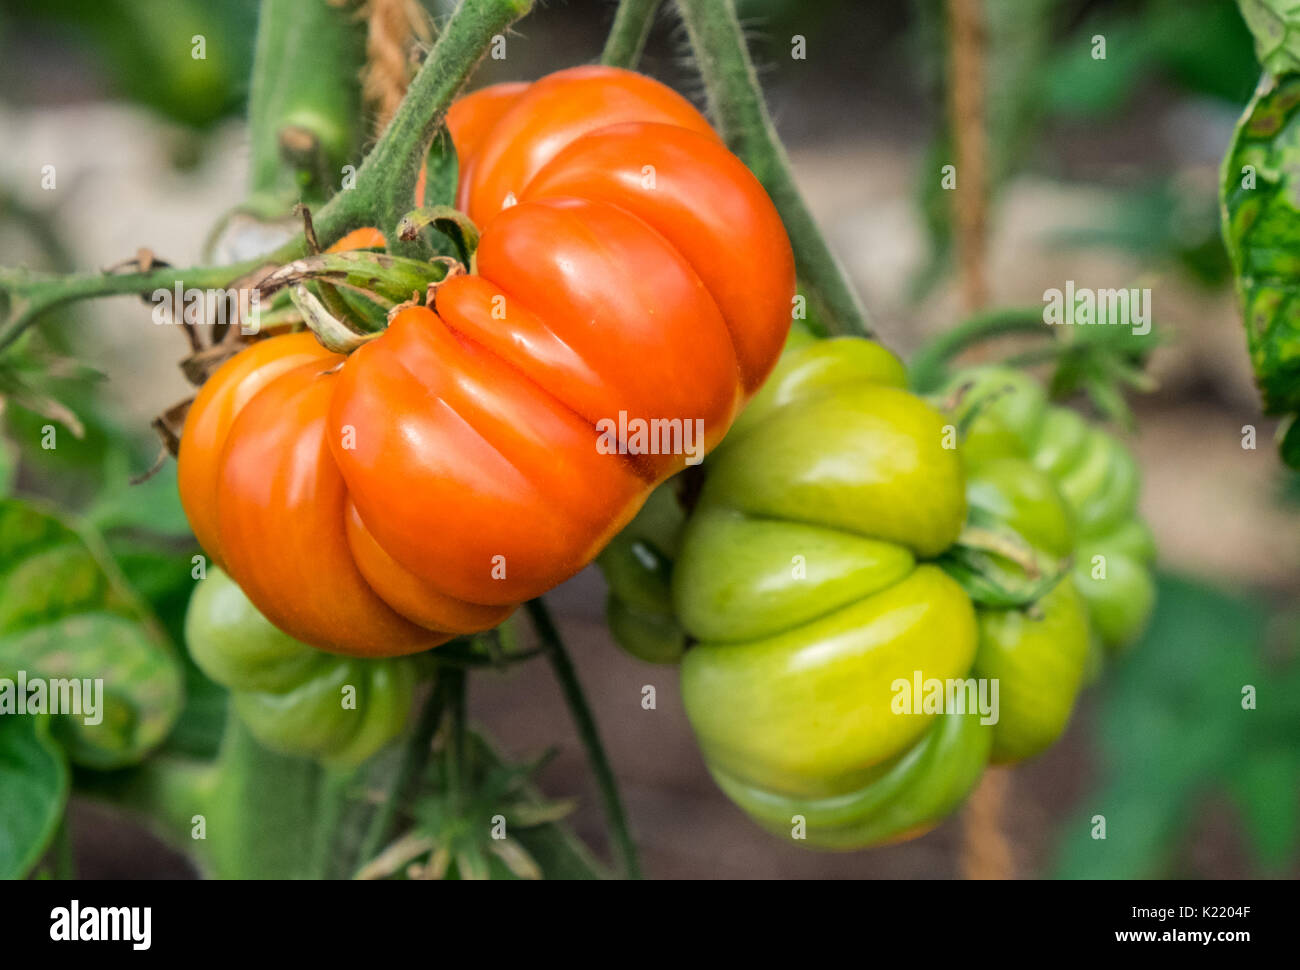 Costoluto Fiorentino ( beefsteak) tomato Stock Photo